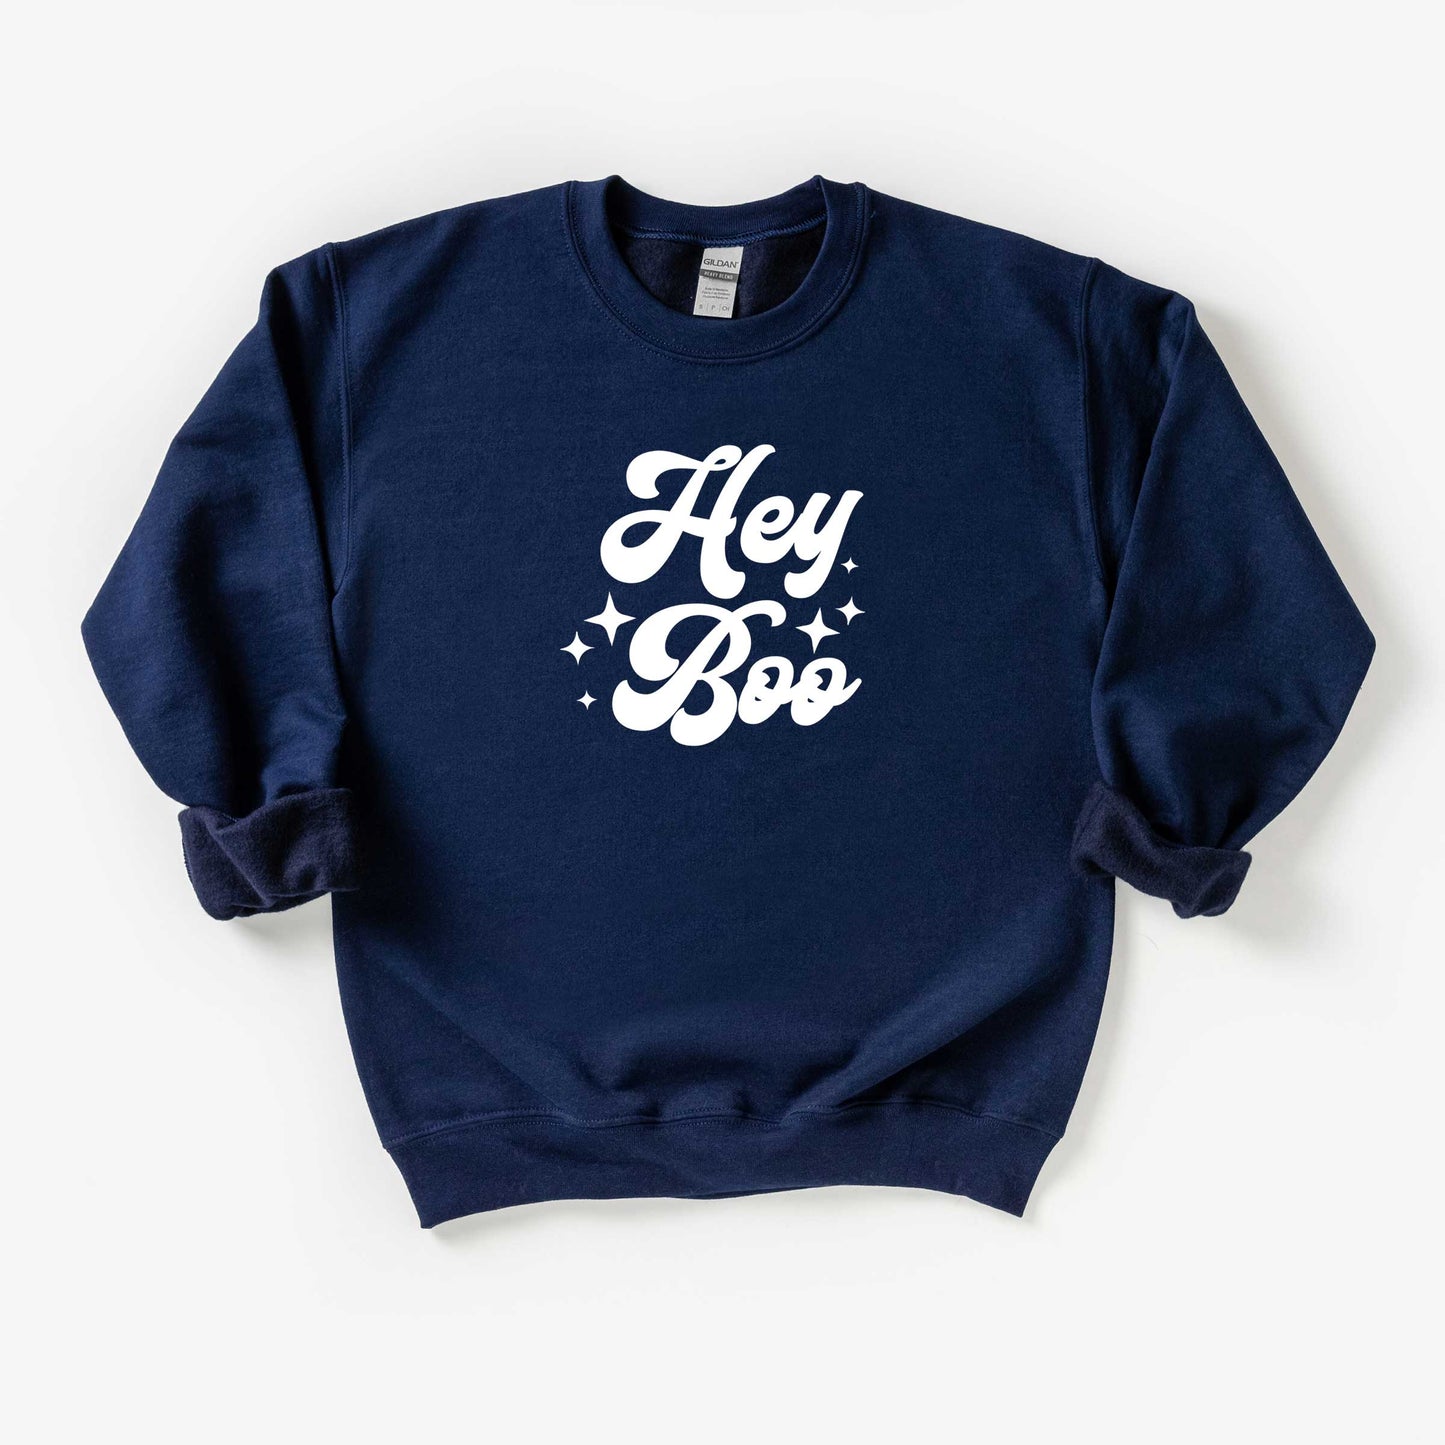 Hey Boo Stars | Youth Sweatshirt